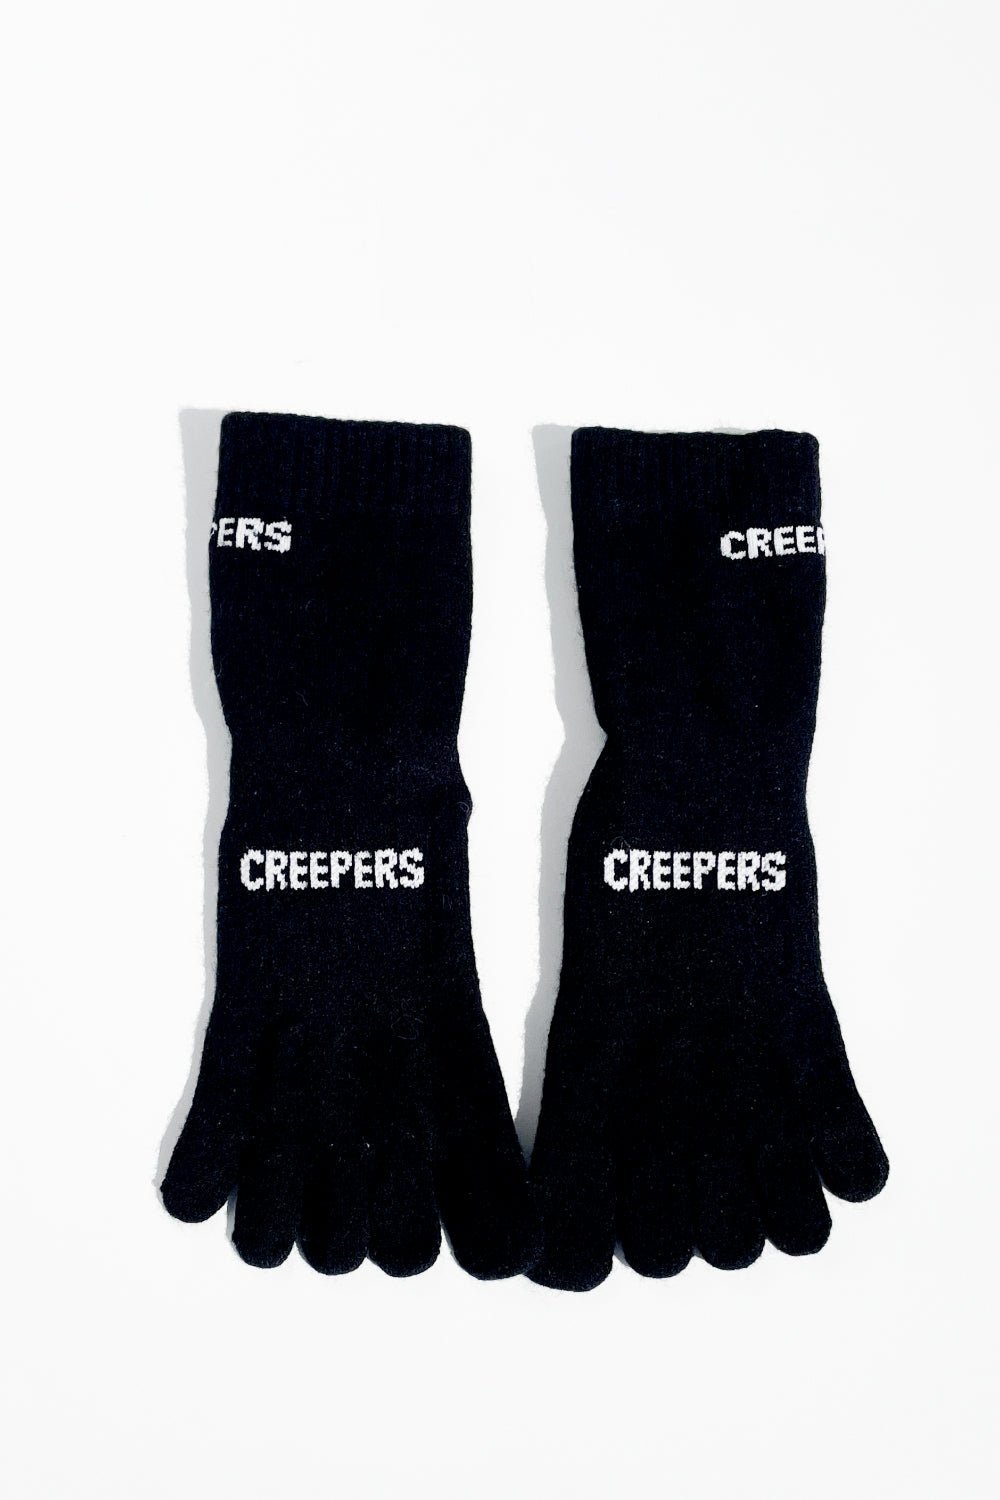 Creepers Merino Toe Socks - Quarter Crew Length Lightweight Runner | Coffee Outdoors